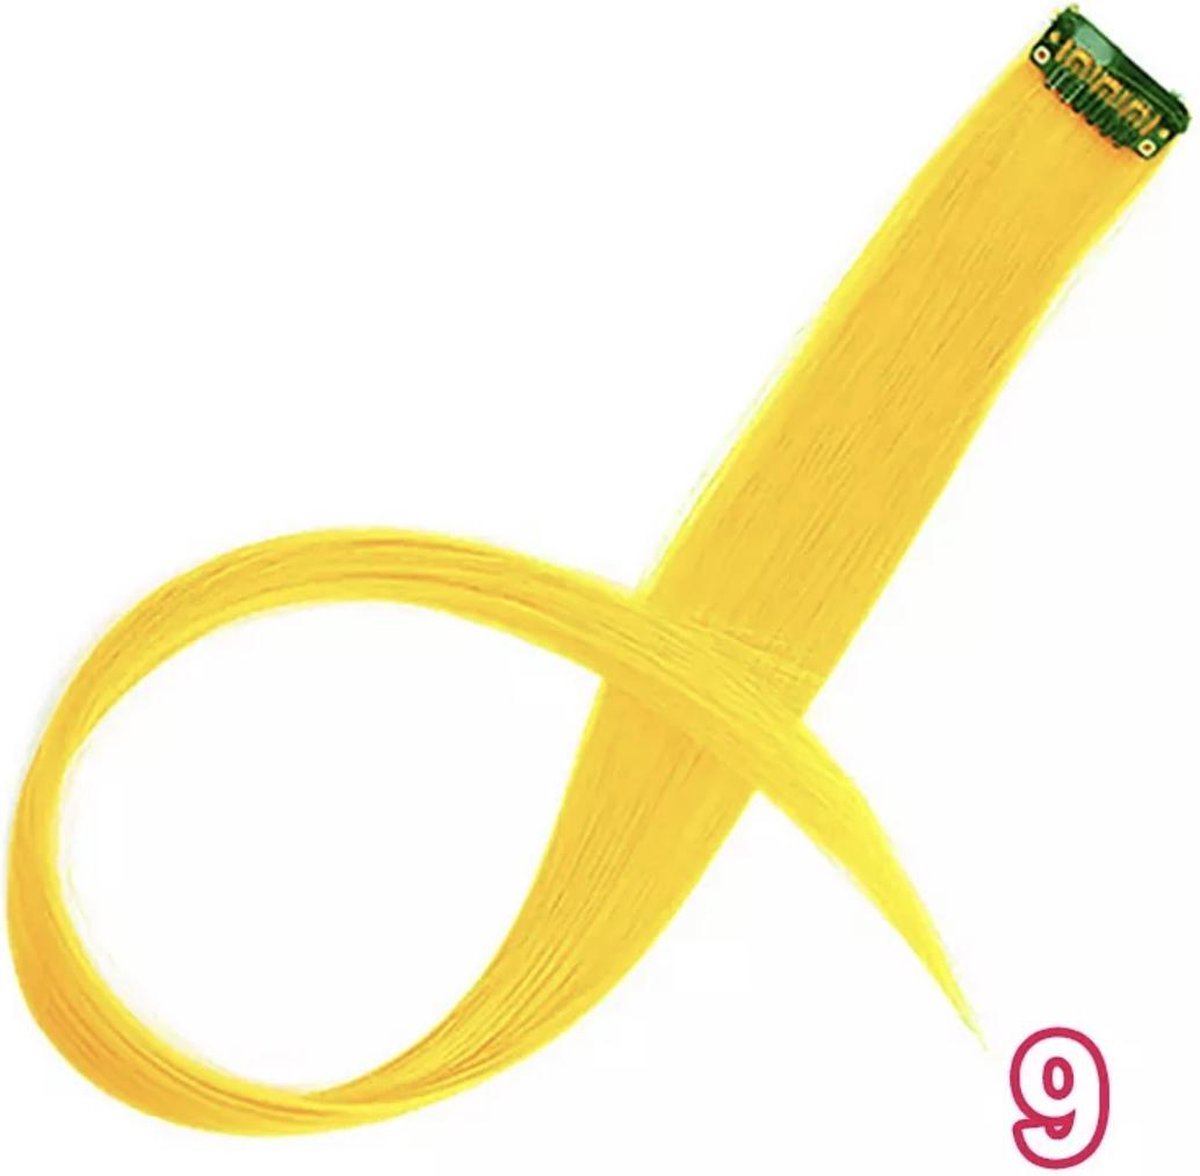 Clip in hairextension geel - nep haar extension - clip in haar - gekleurd plukje haar - clip in haarextension - nep haar plukje gekleurd